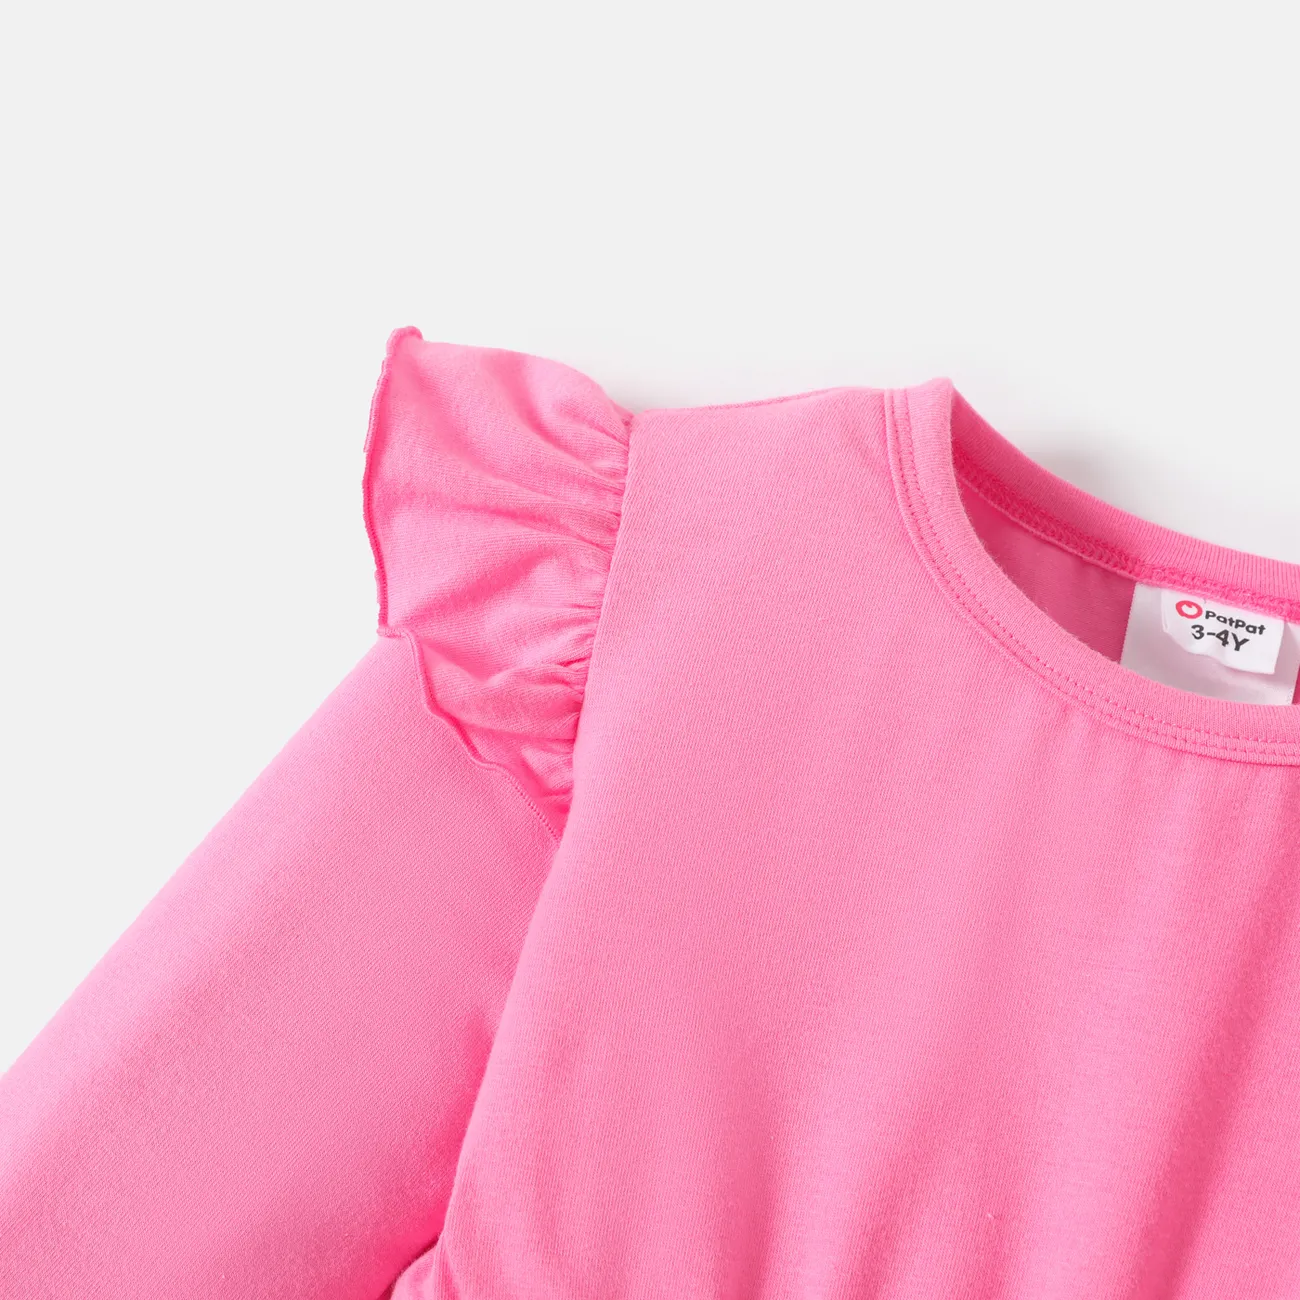 Barbie 2pcs Toddler Girl Ruffled Long-sleeve Cotton Tee and Allover Print Leggings Set Pink big image 1